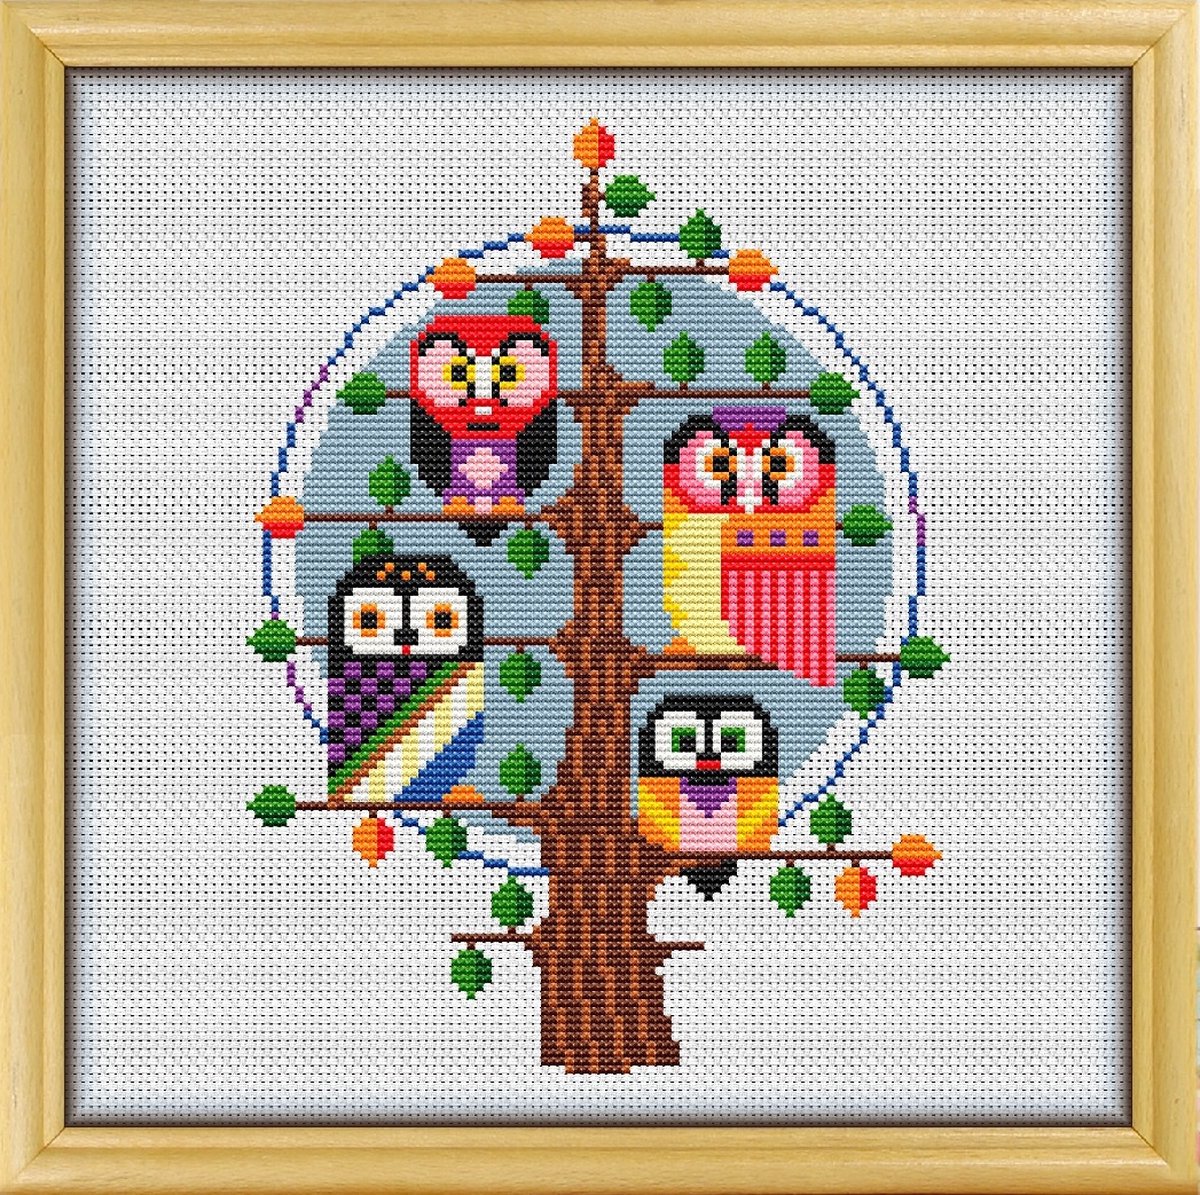 Borduurpakket Mandala The Owl Family - de Uilenfamilie - APS - telpatroon om zelf te borduren